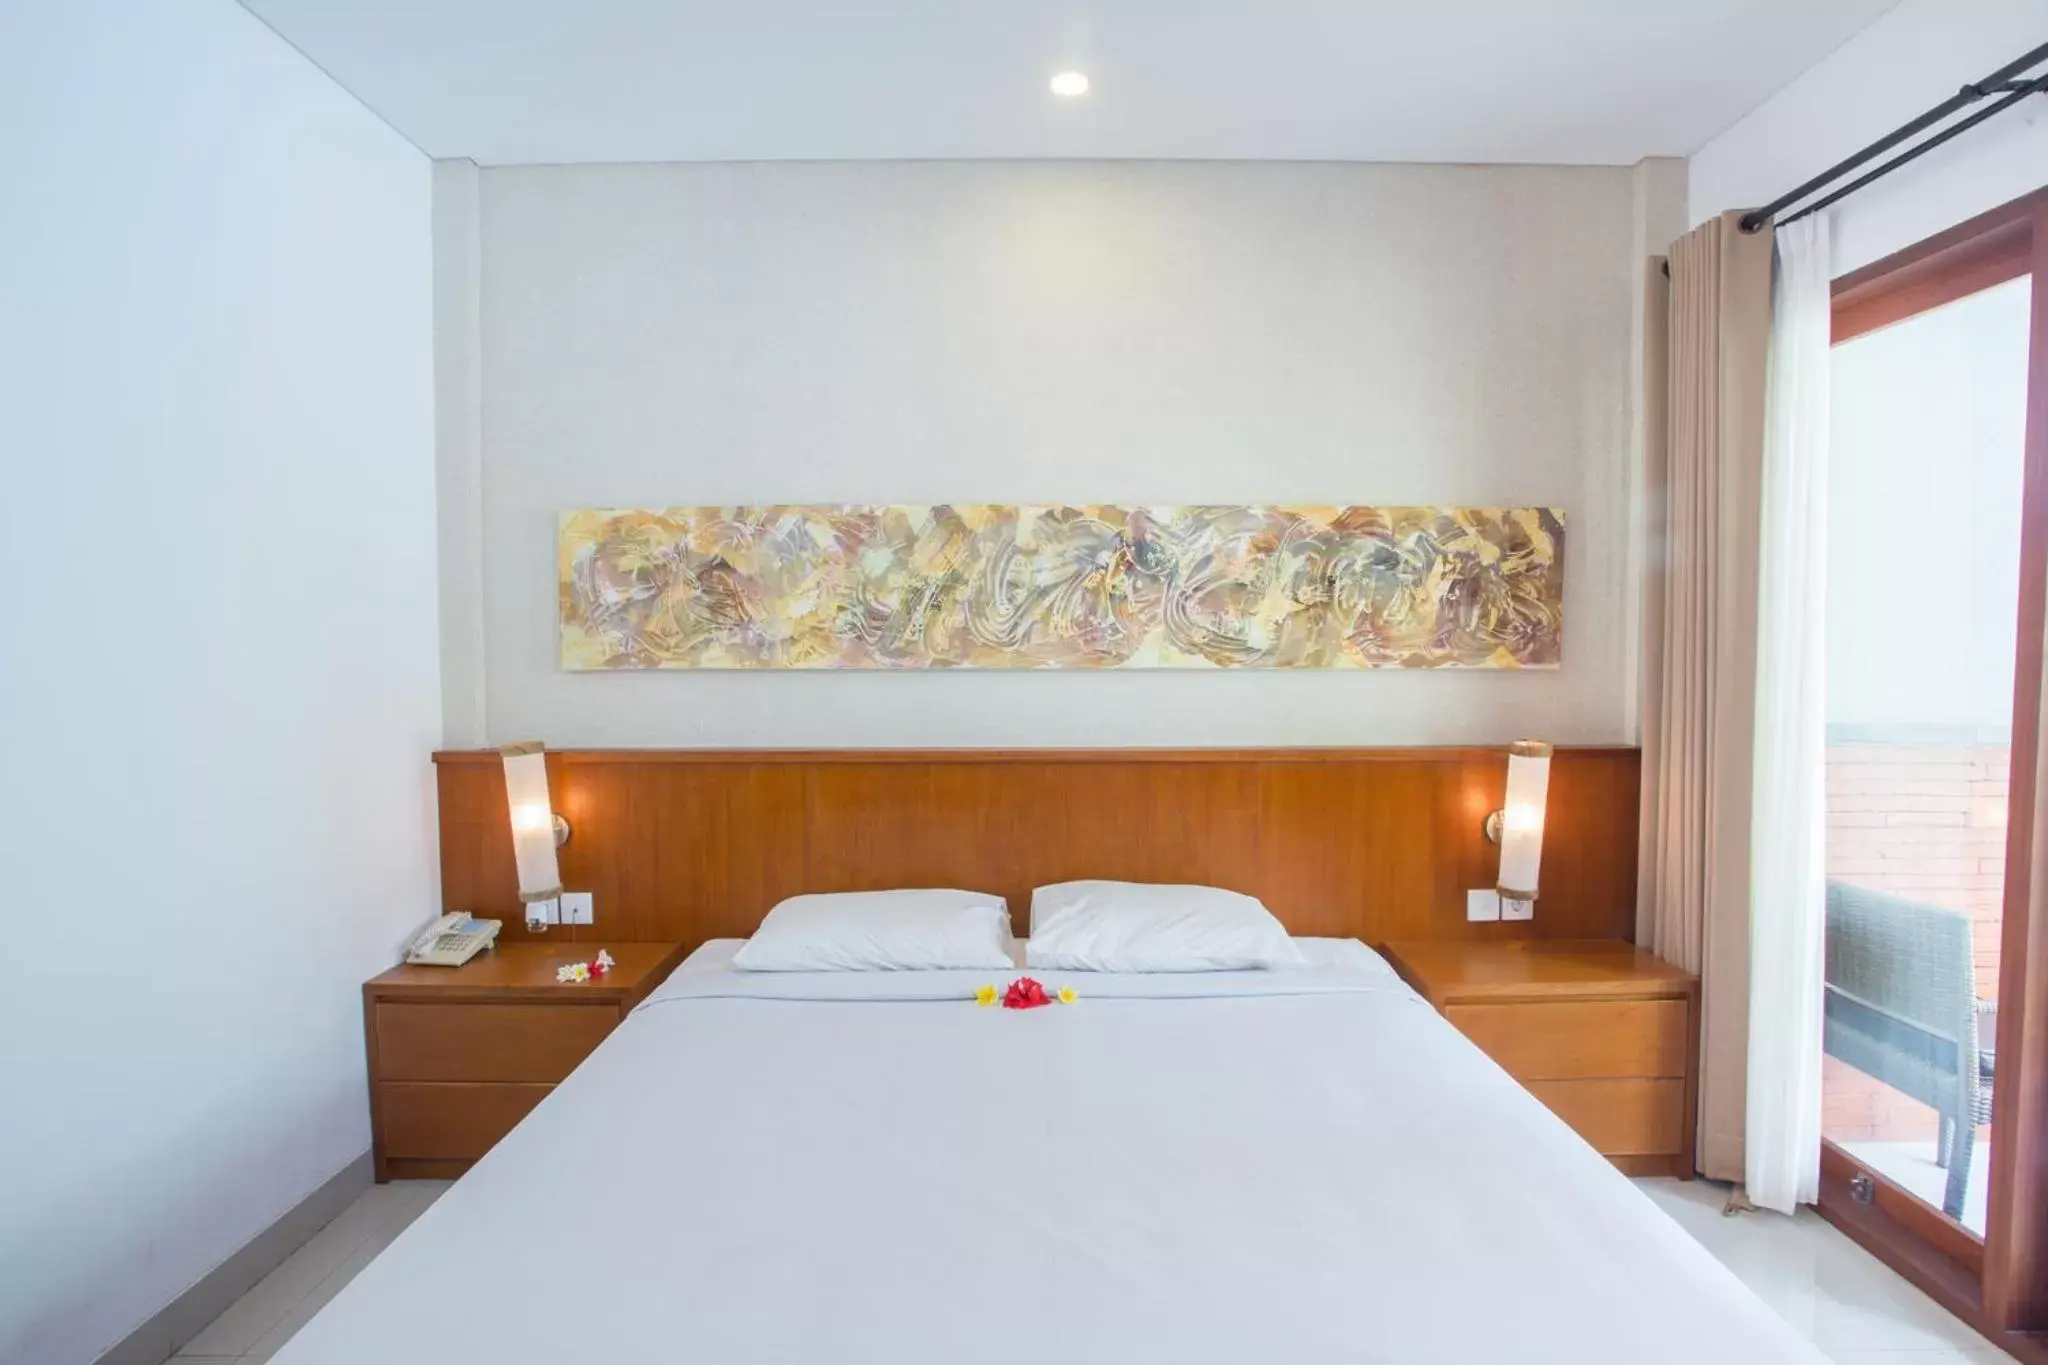 Bedroom, Room Photo in Sinar Bali Hotel